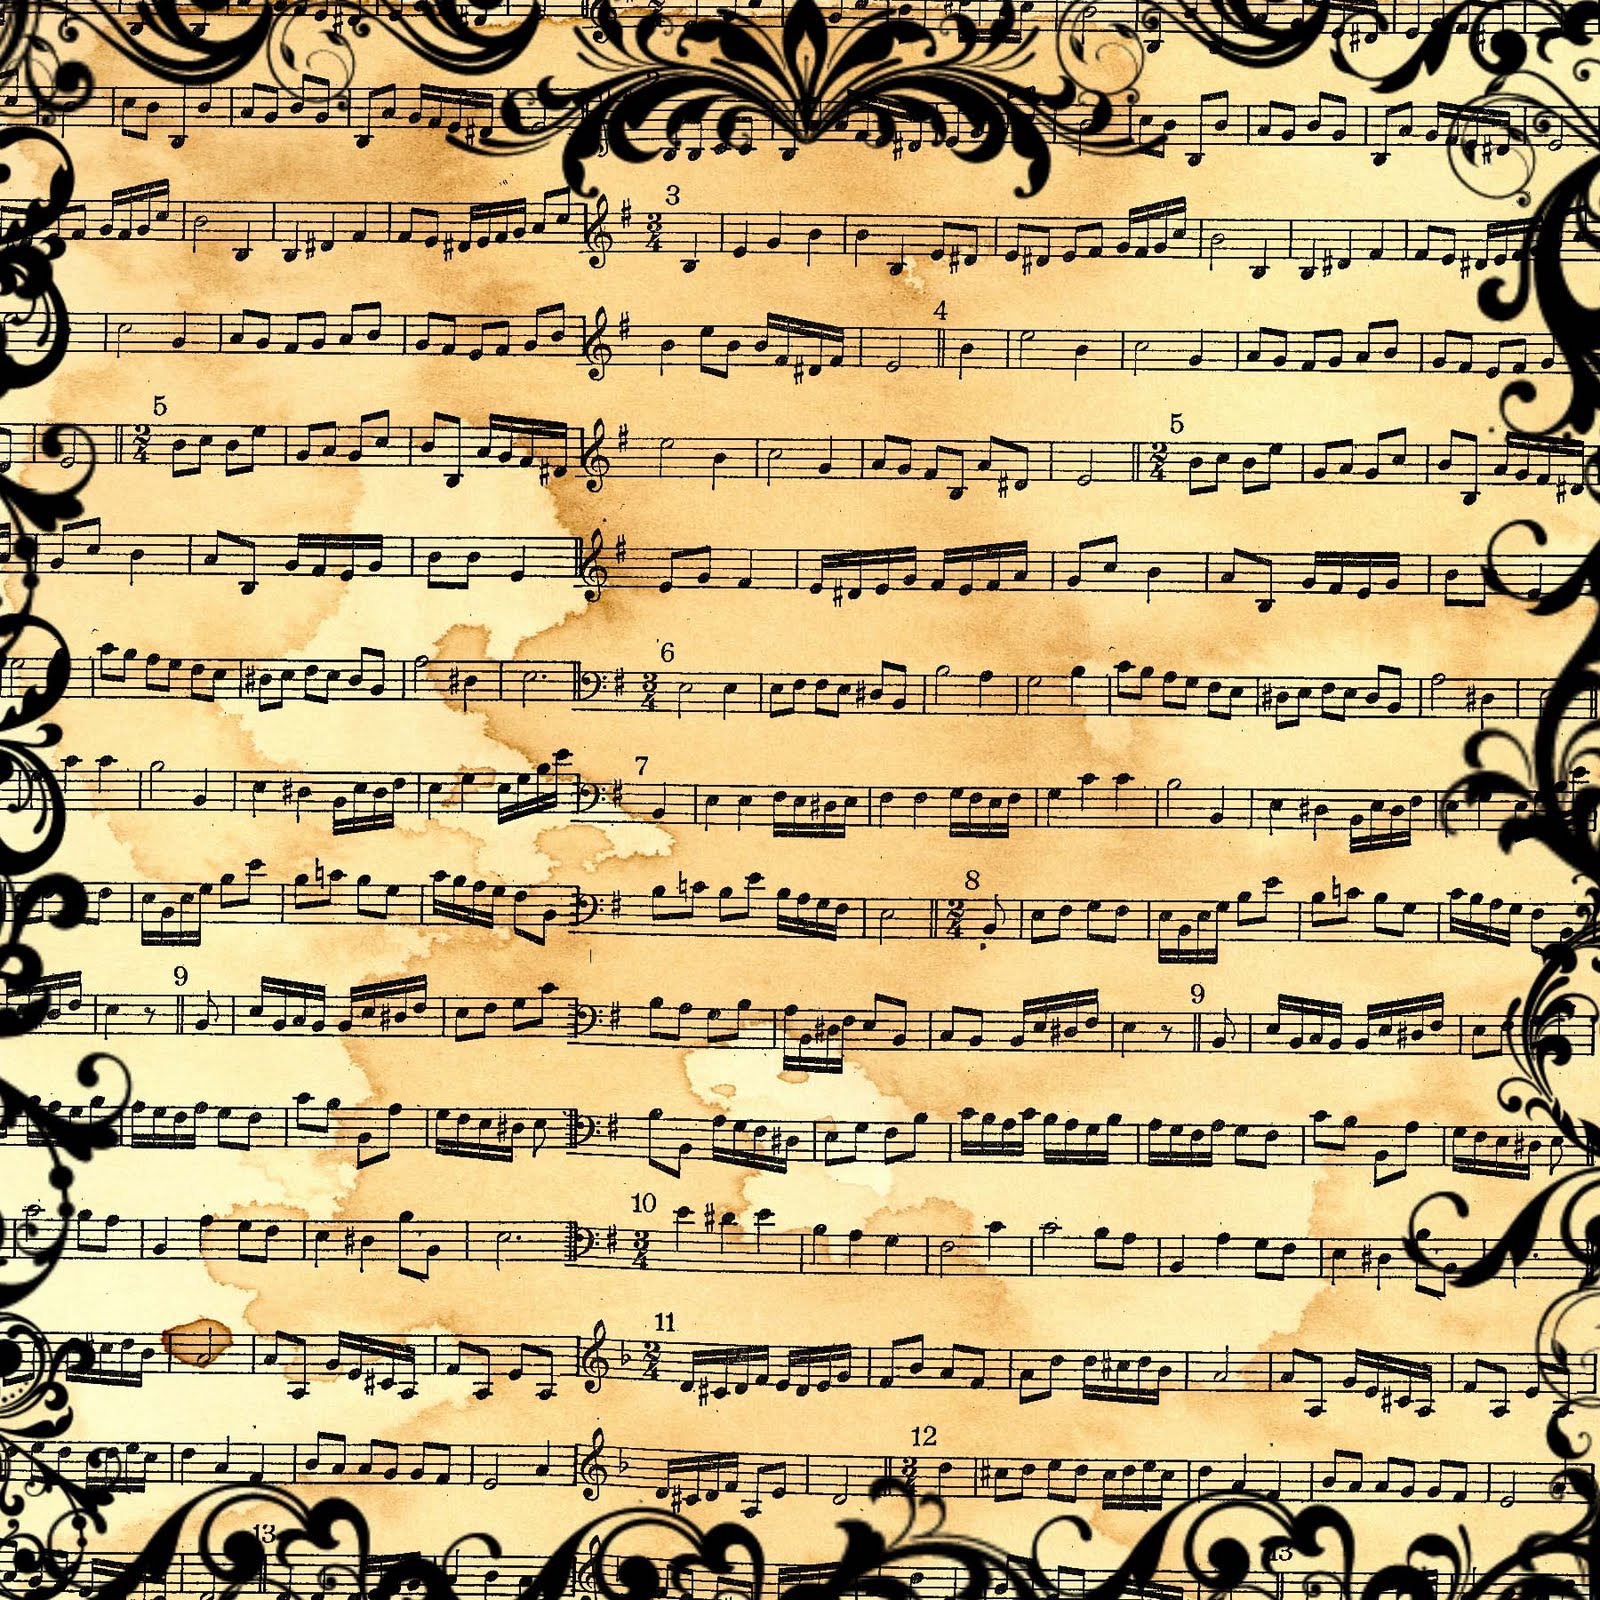 Vintage Sheet Music Paper